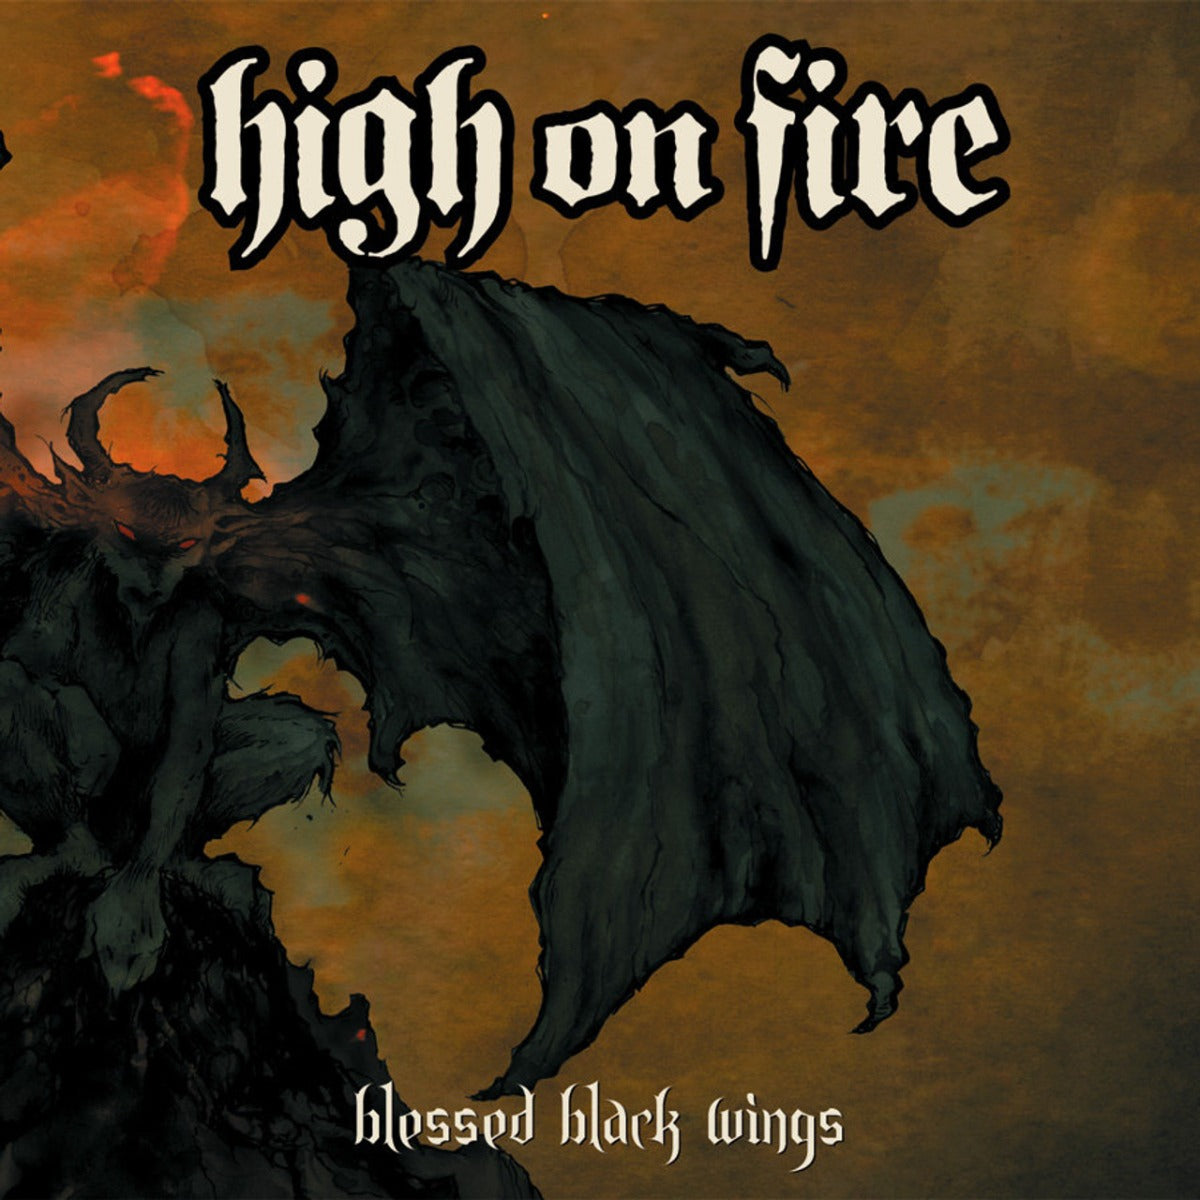 High on Fire - Blessed Black Wings (Colored Vinyl, Blue, Orange) (2 LP)